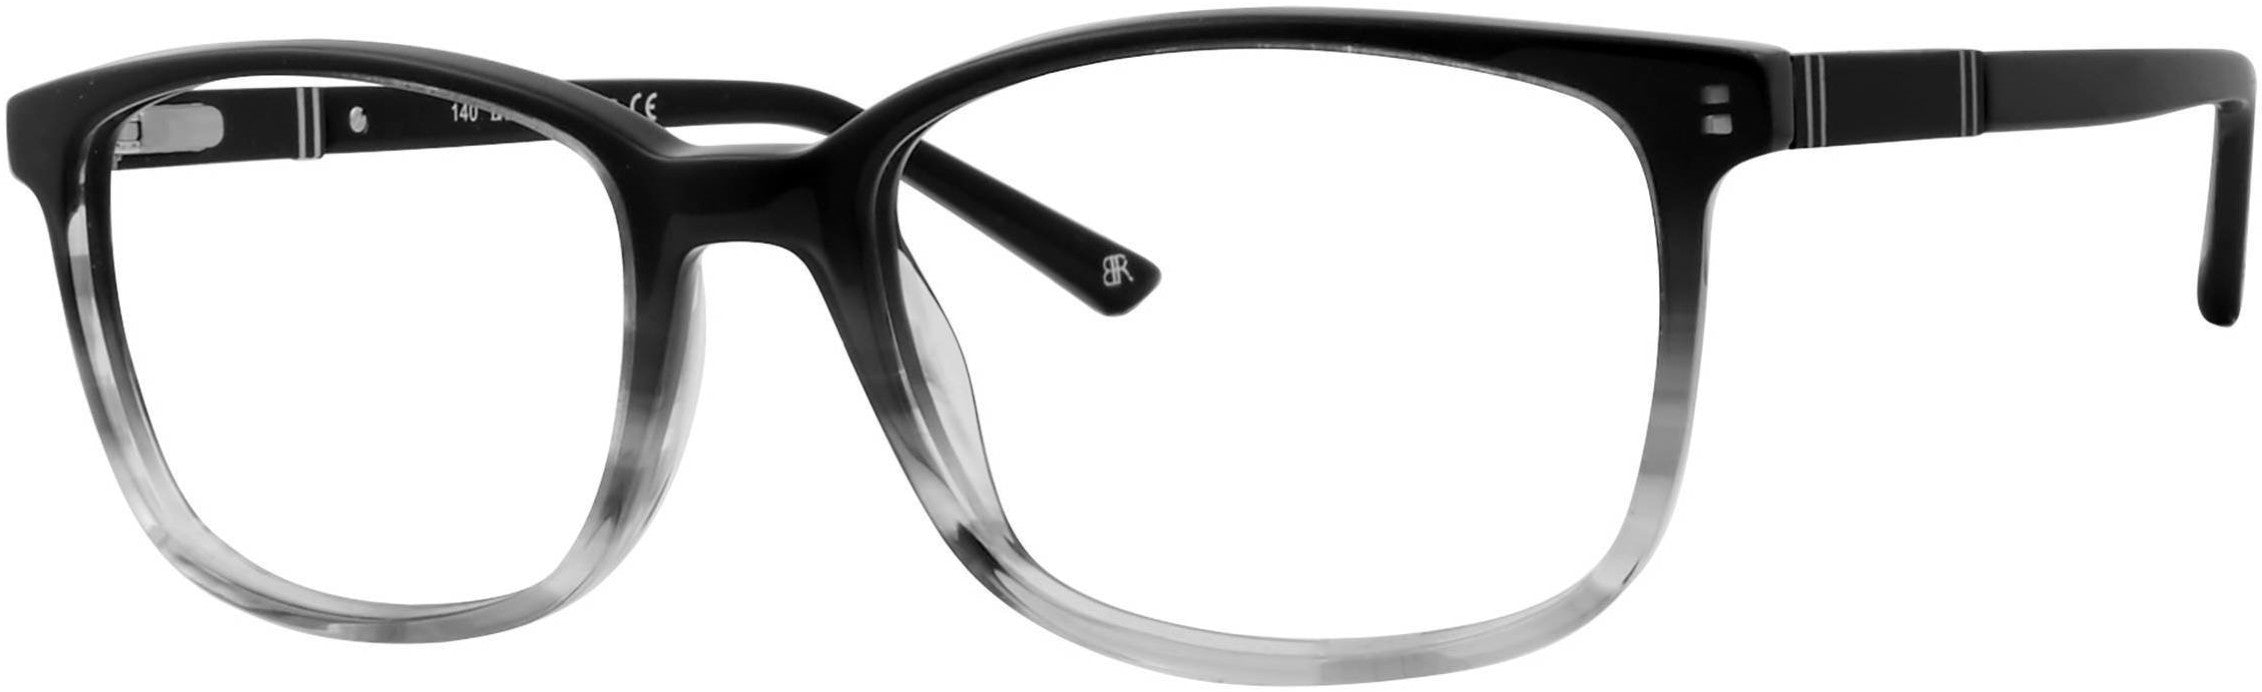 Banana Republic Kayden/N Rectangular Eyeglasses 0U76-0U76  Black Transparent Gymarut (00 Demo Lens)